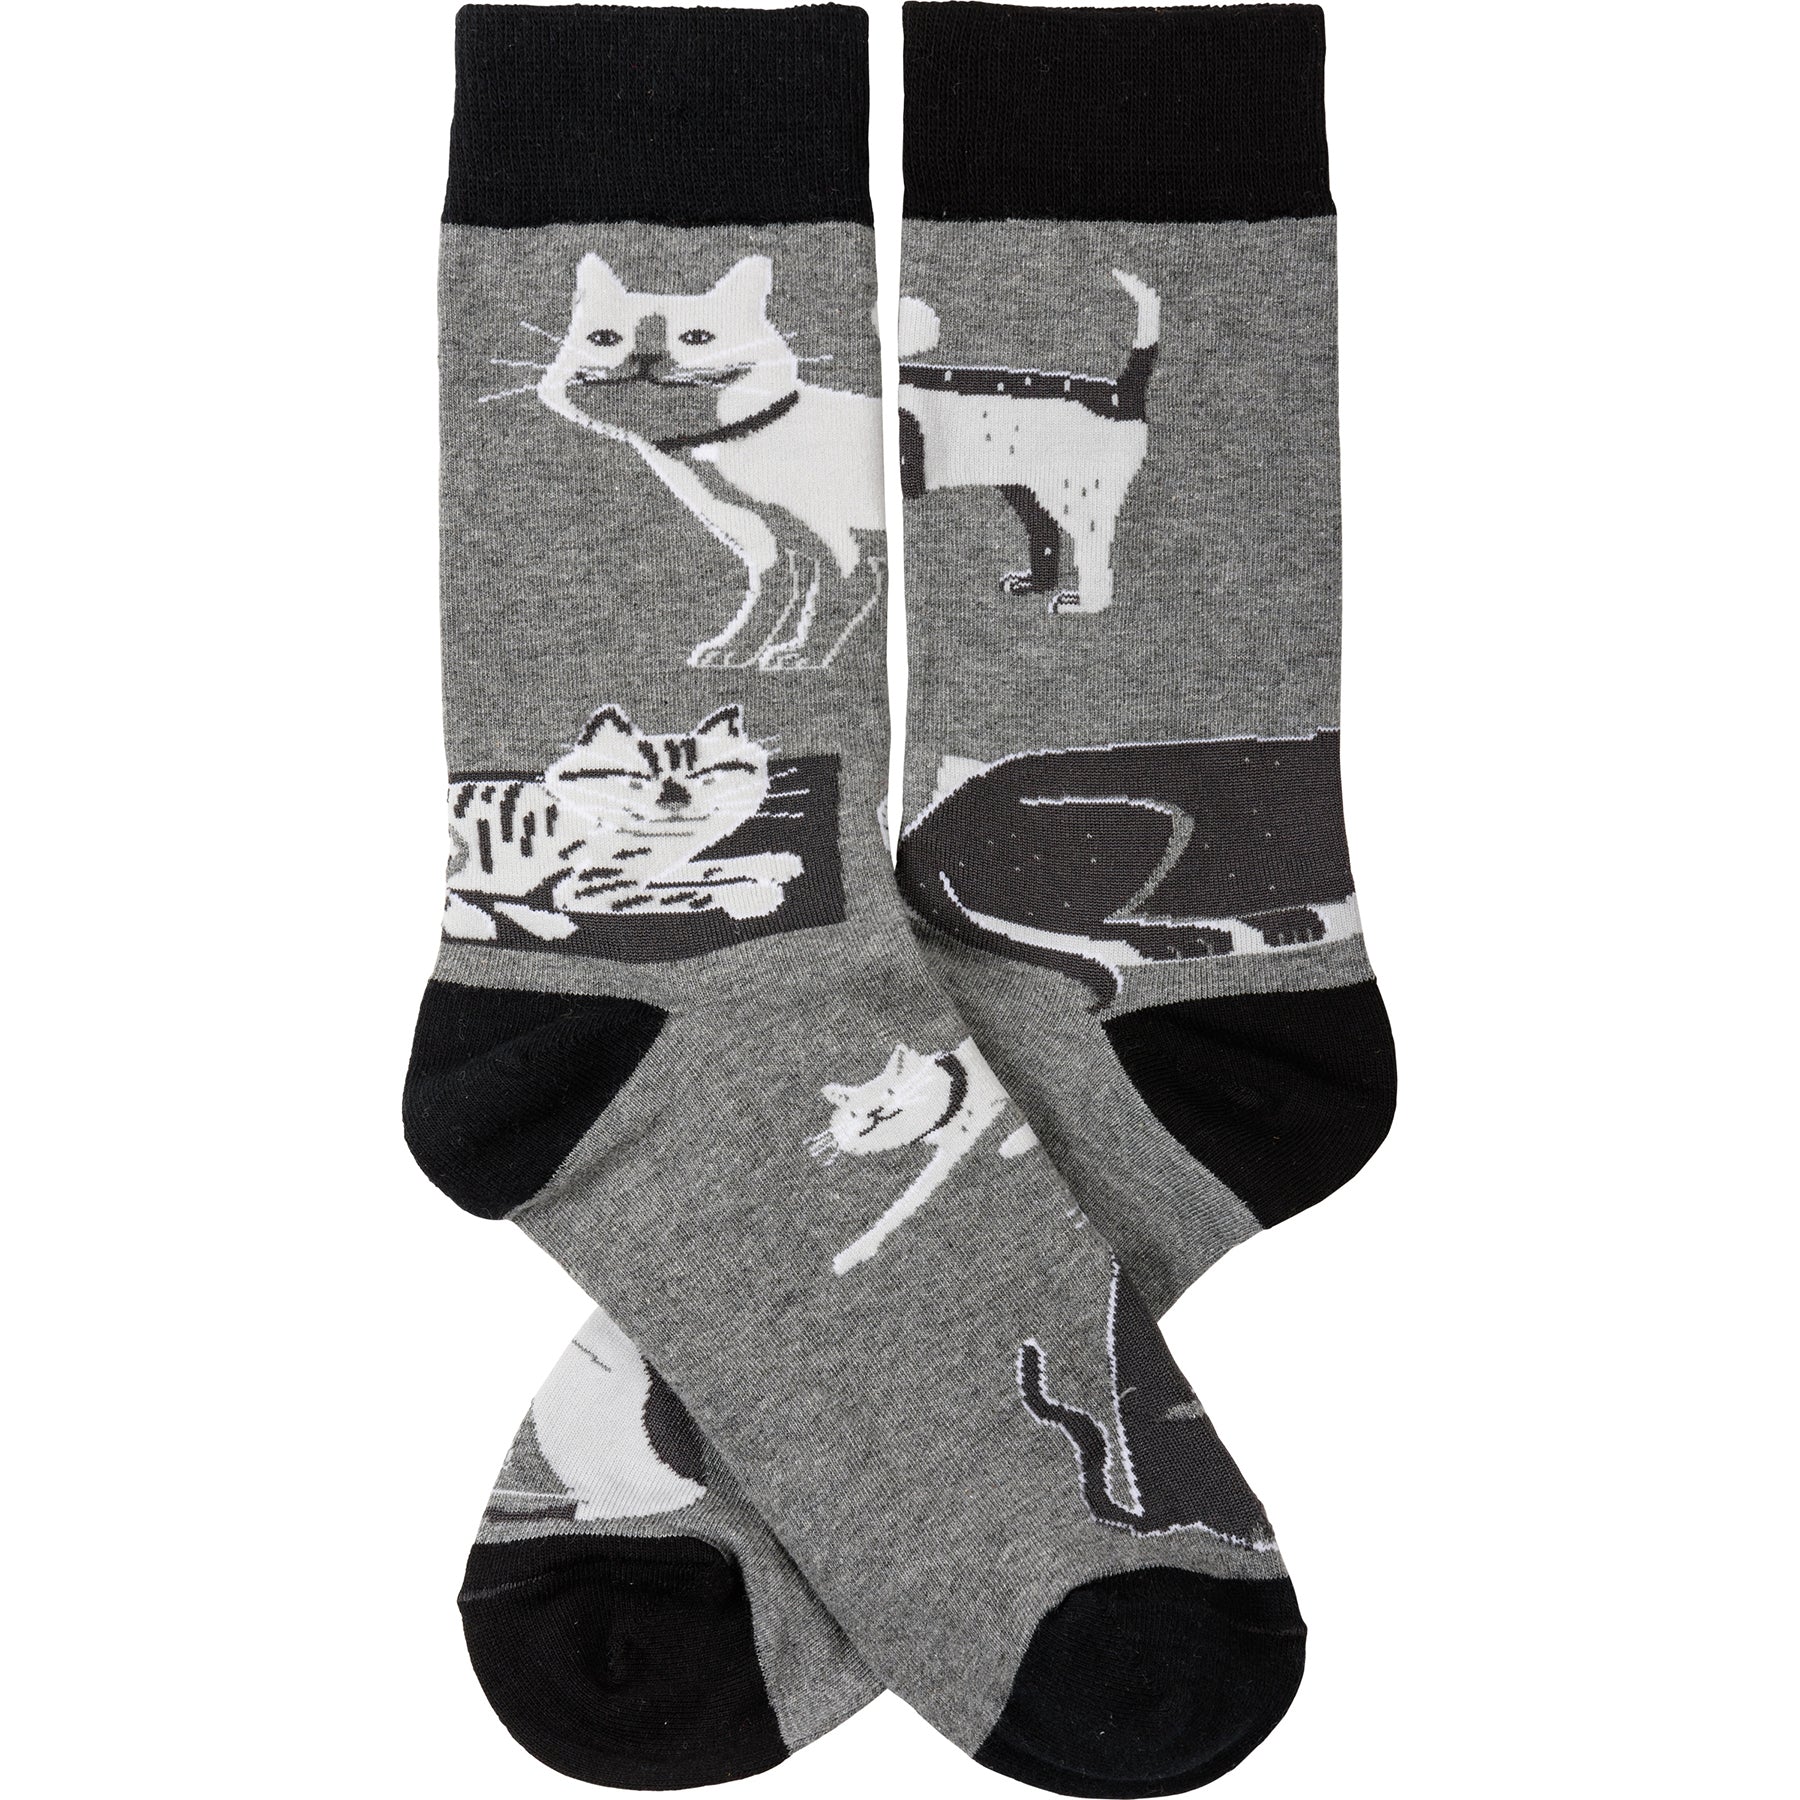 Socks - Cats & Dogs